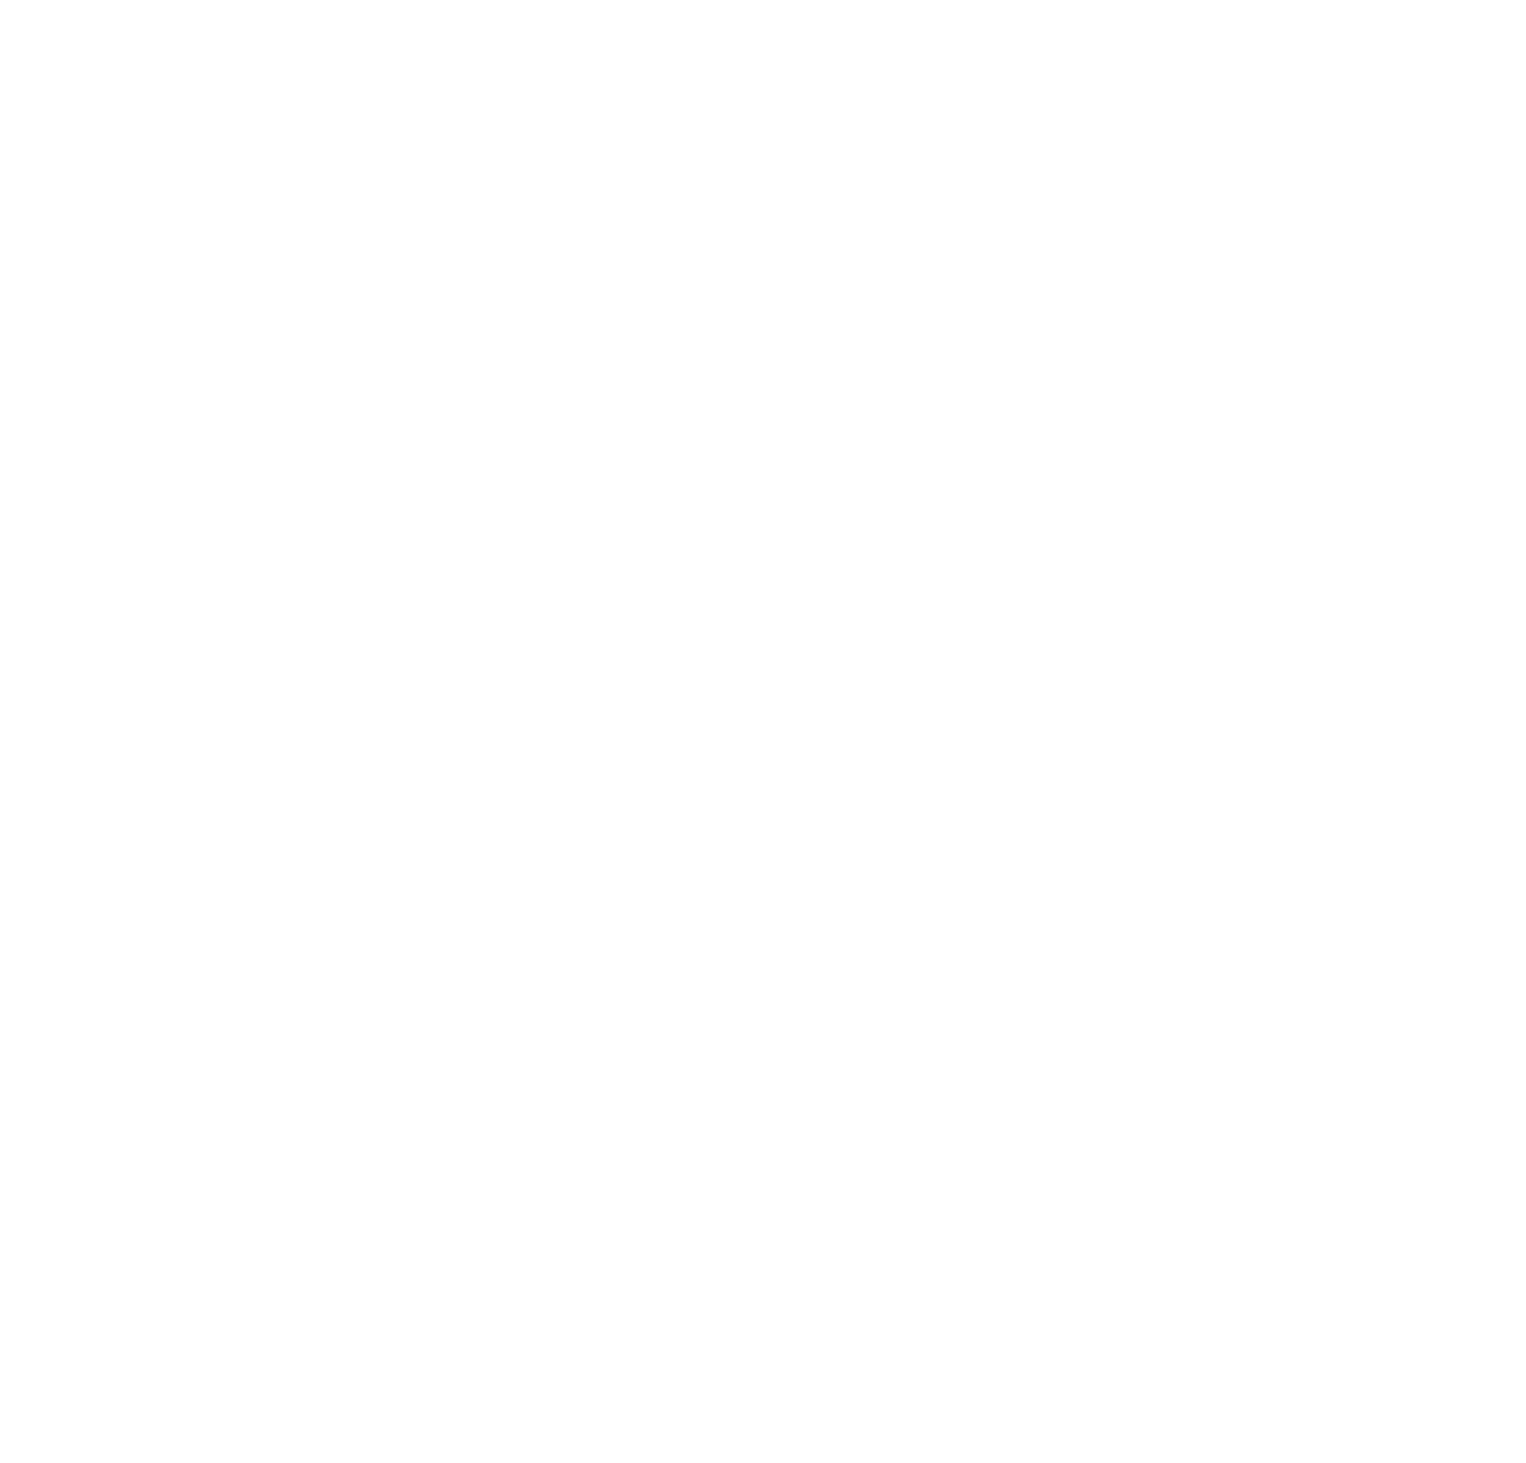 Starbox Group logo for dark backgrounds (transparent PNG)